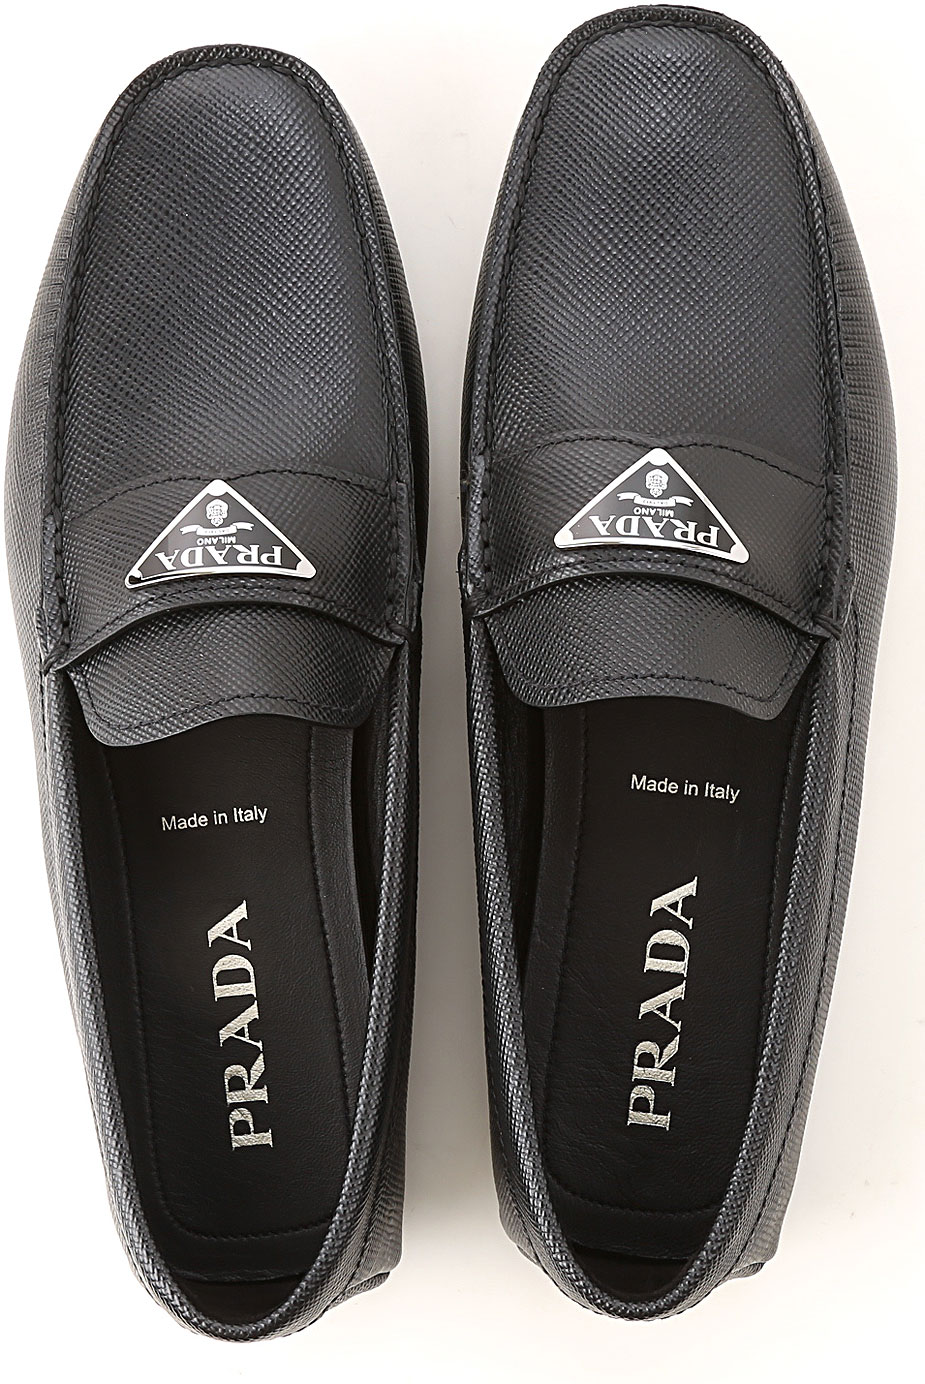 Prada Men's Shoe Size Chart